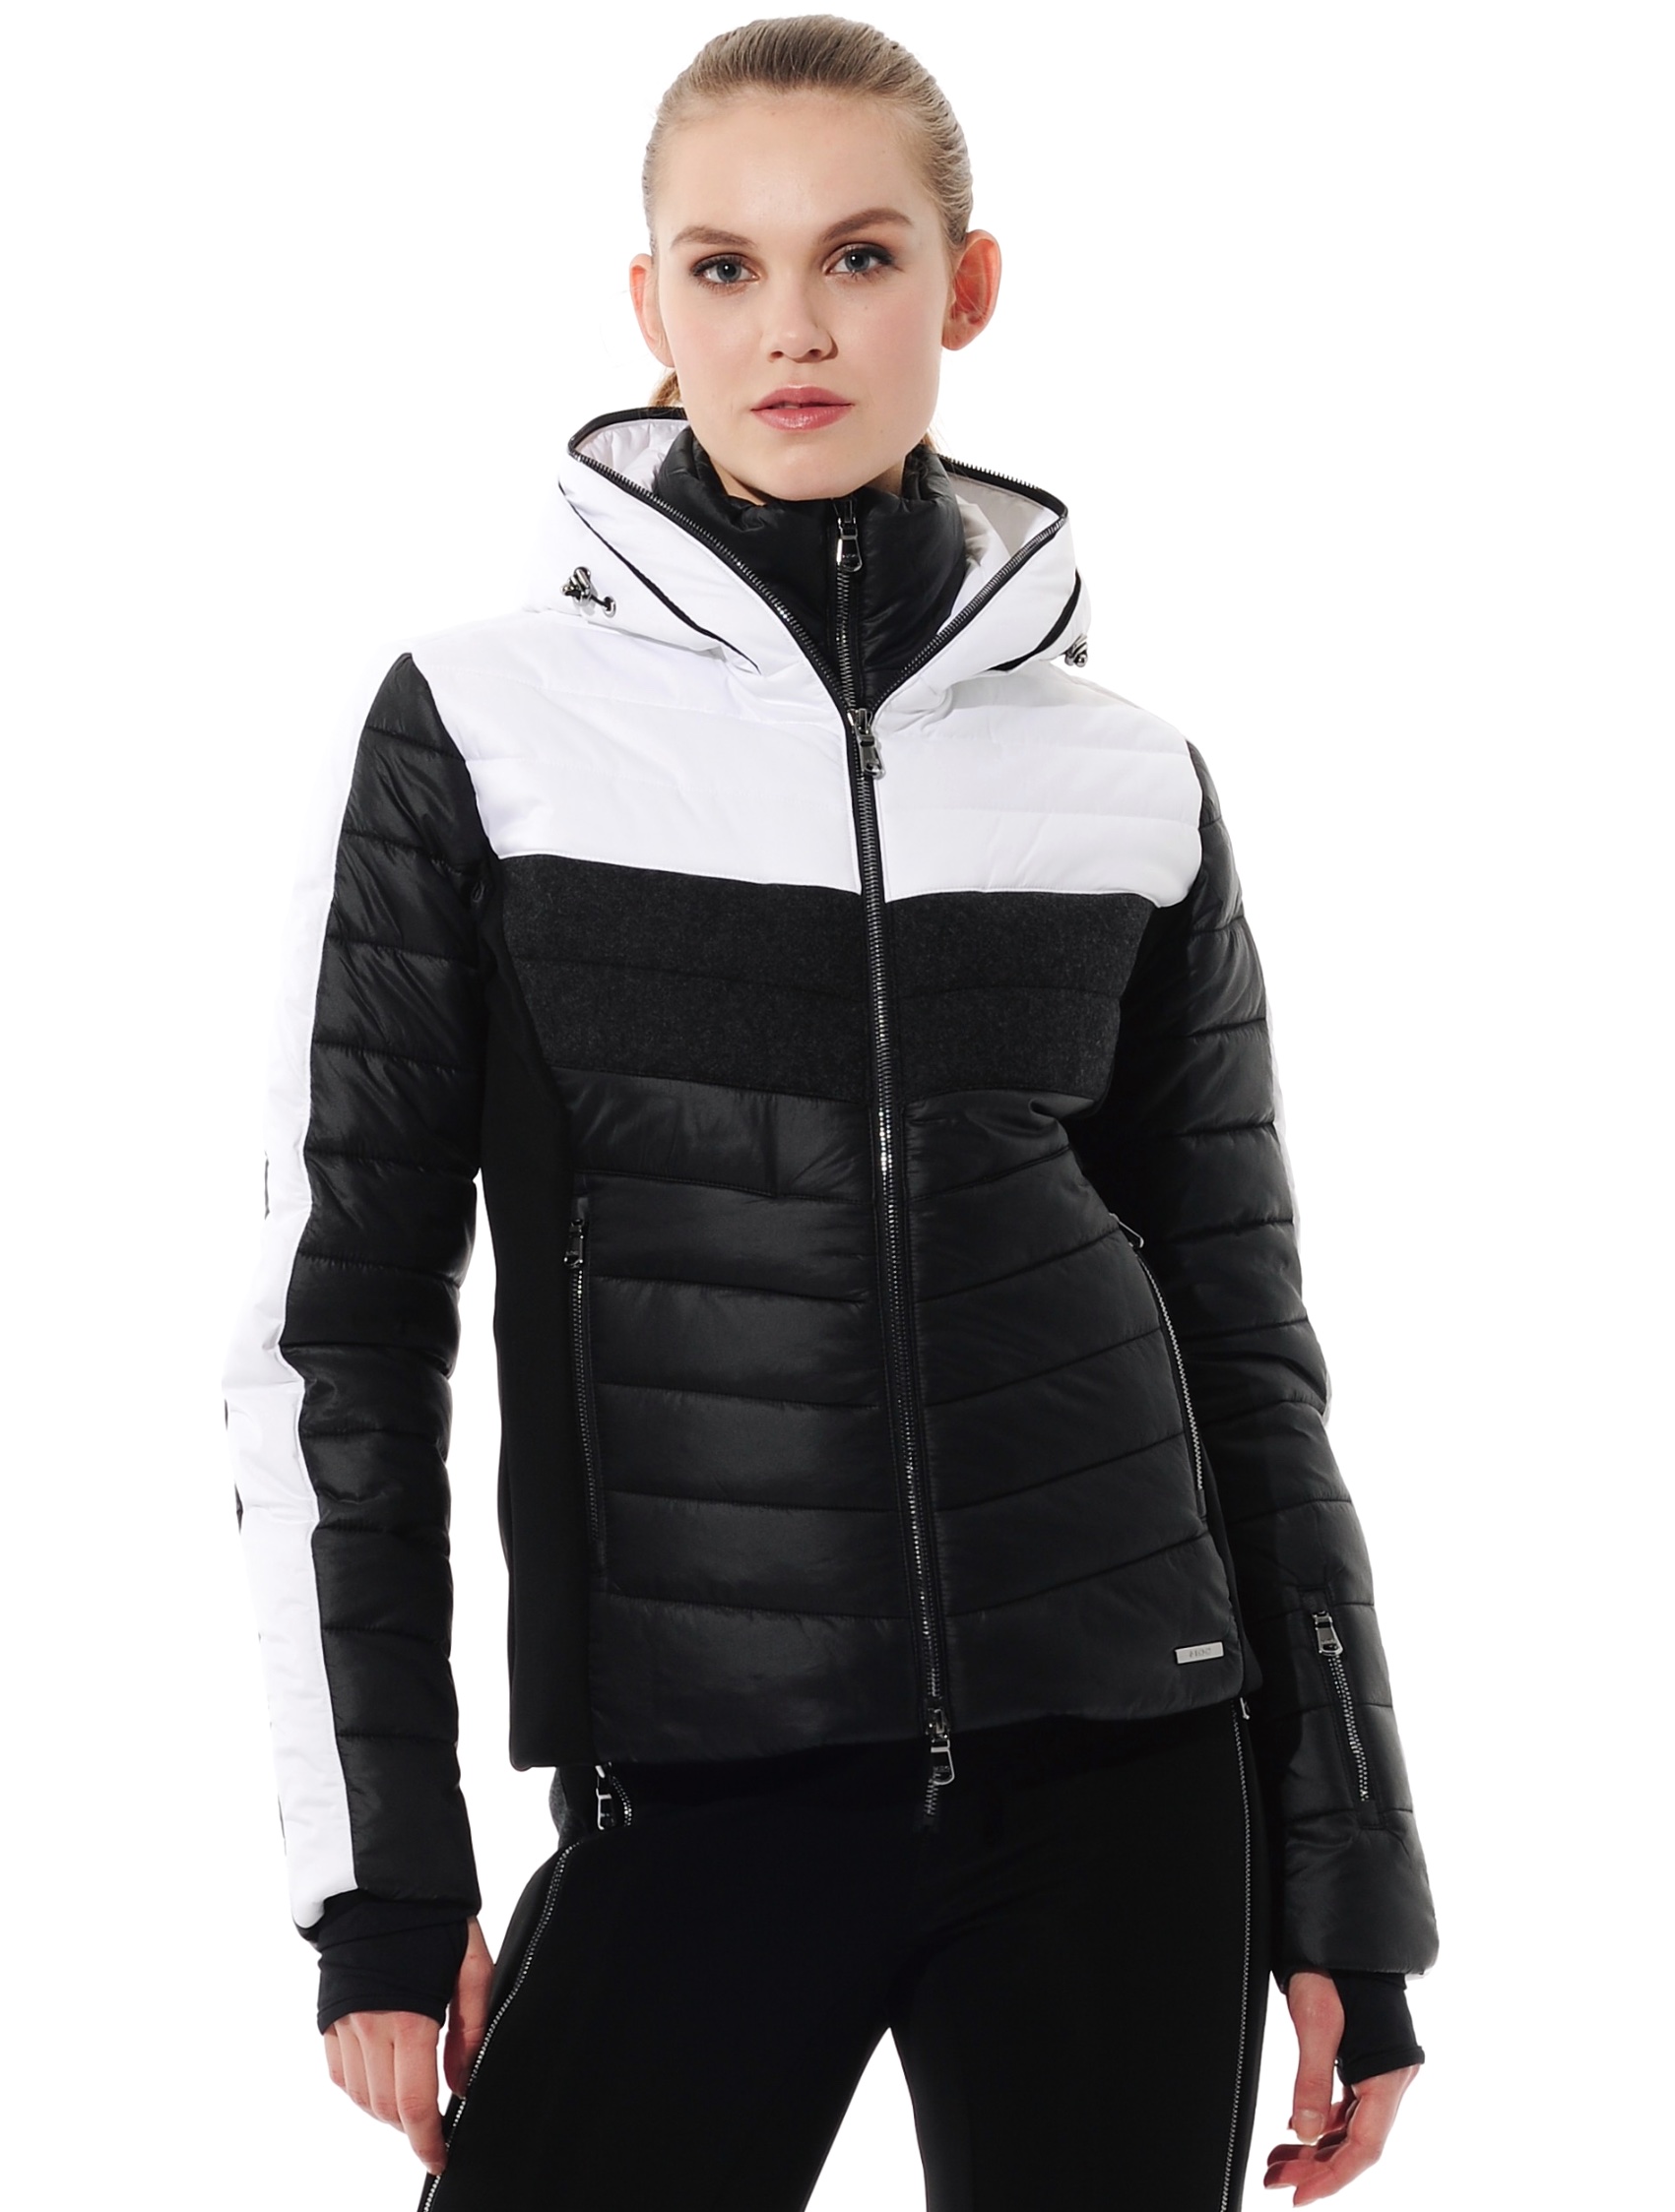 ski jacket with 4way stretch side panels black/white 